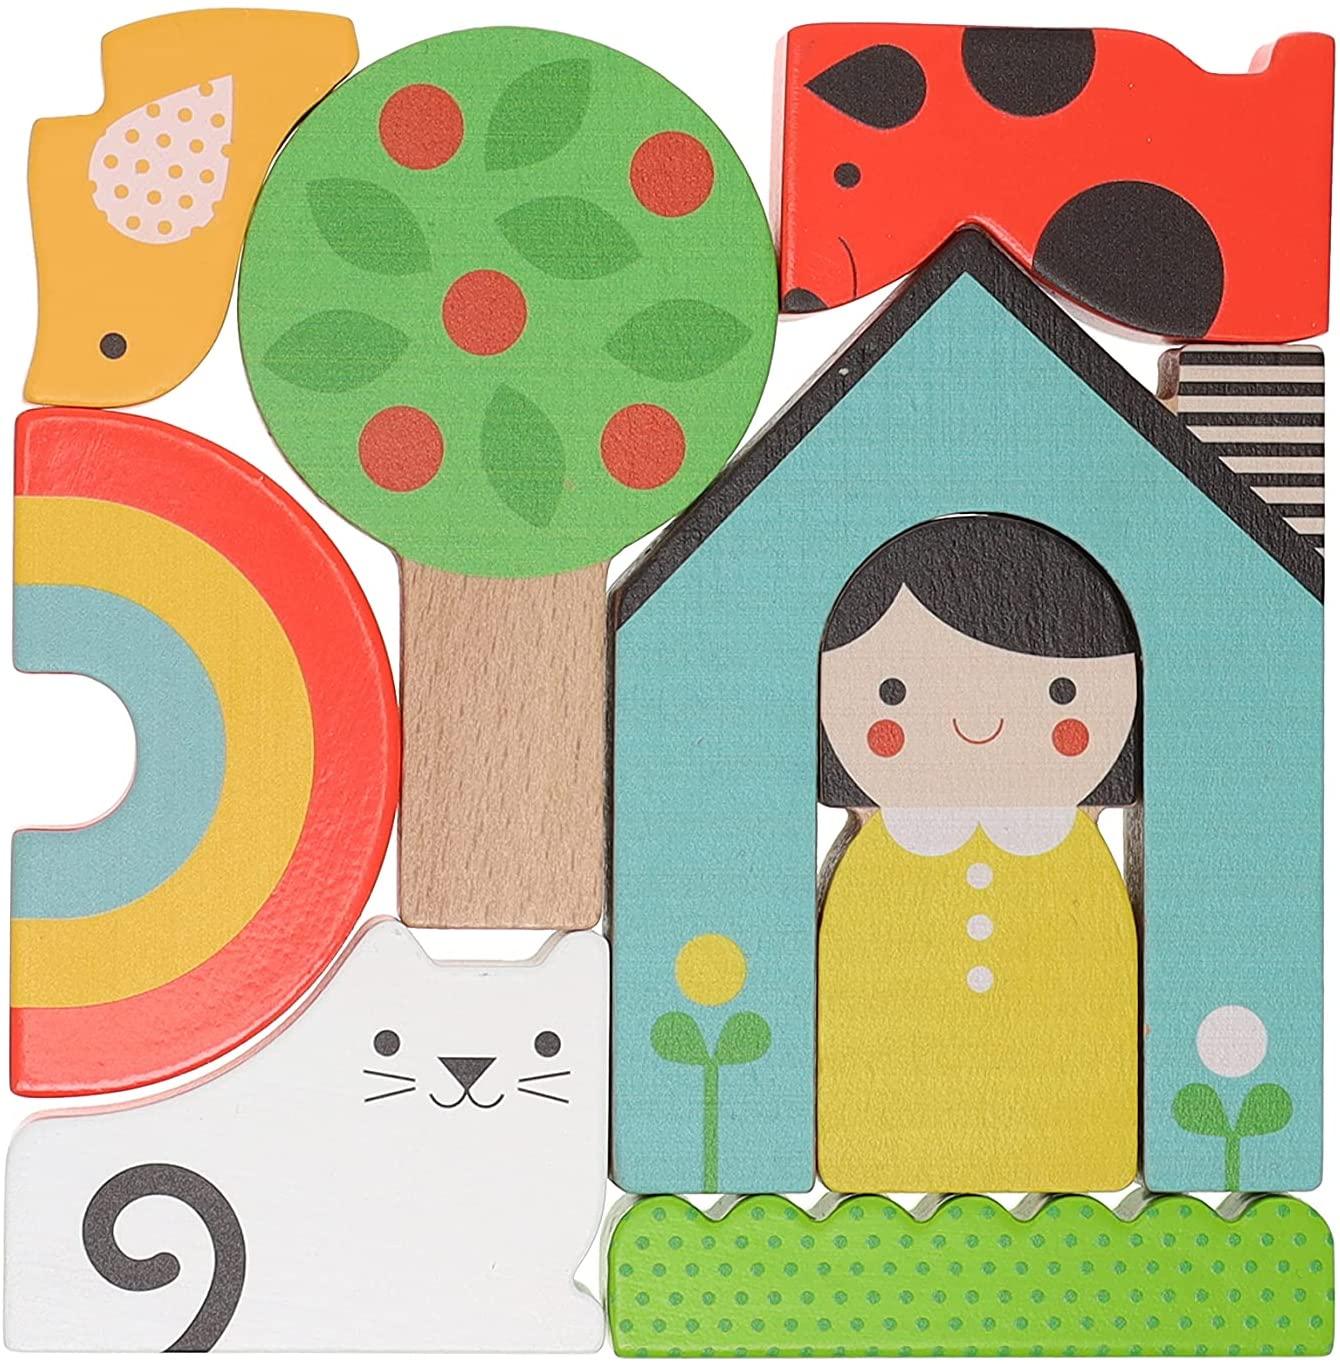 Petit Collage: drewniane puzzle dom At Home - Noski Noski